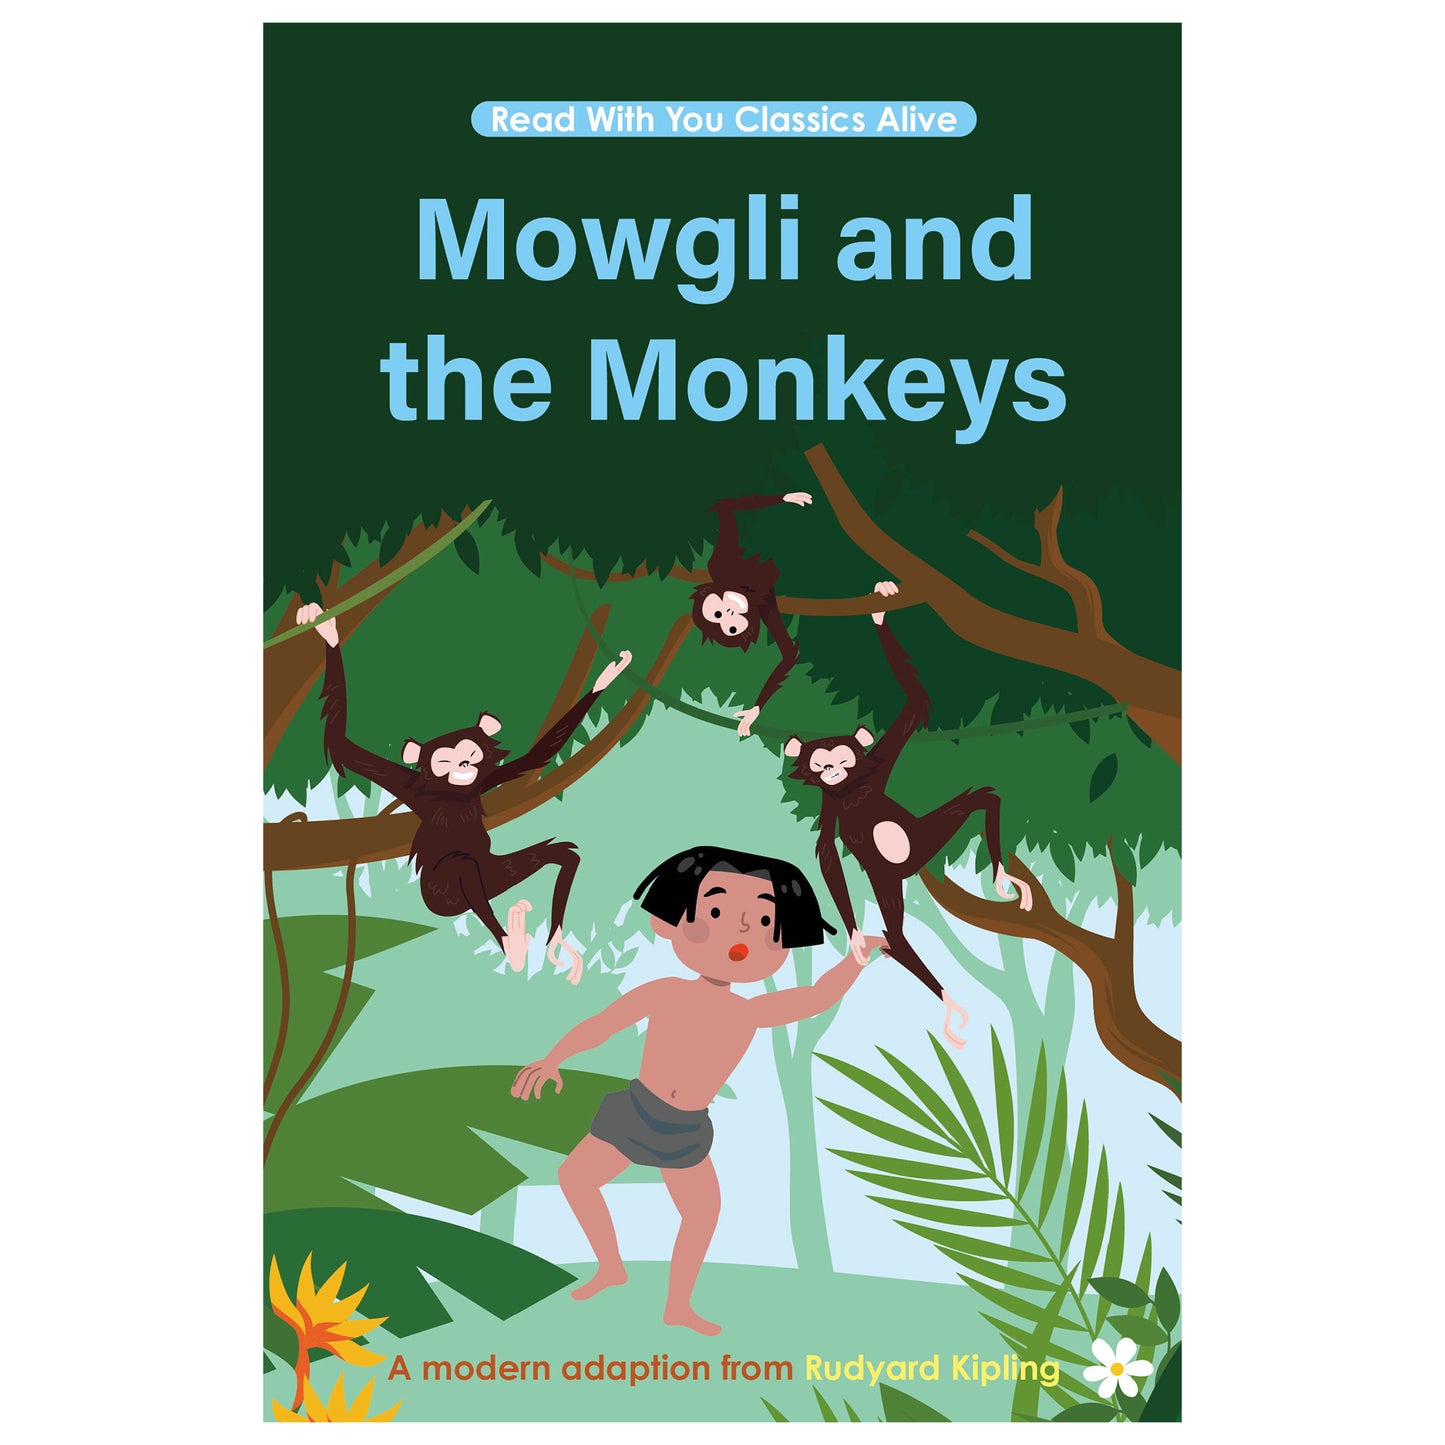 Mowgli and the Monkeys